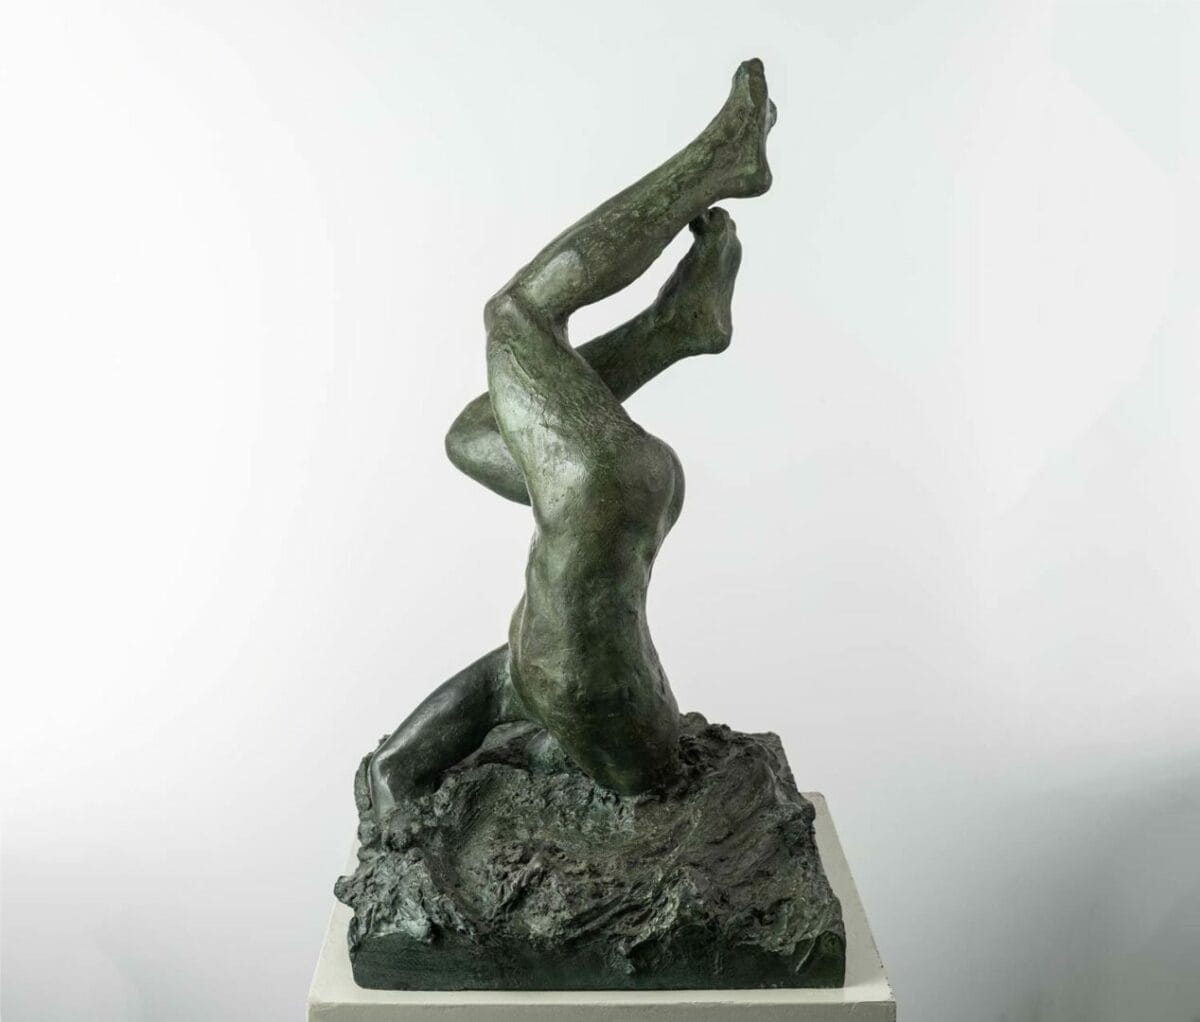 Guy le perse, male nude bronze sculpture representing the fall of Icarus into the sea.